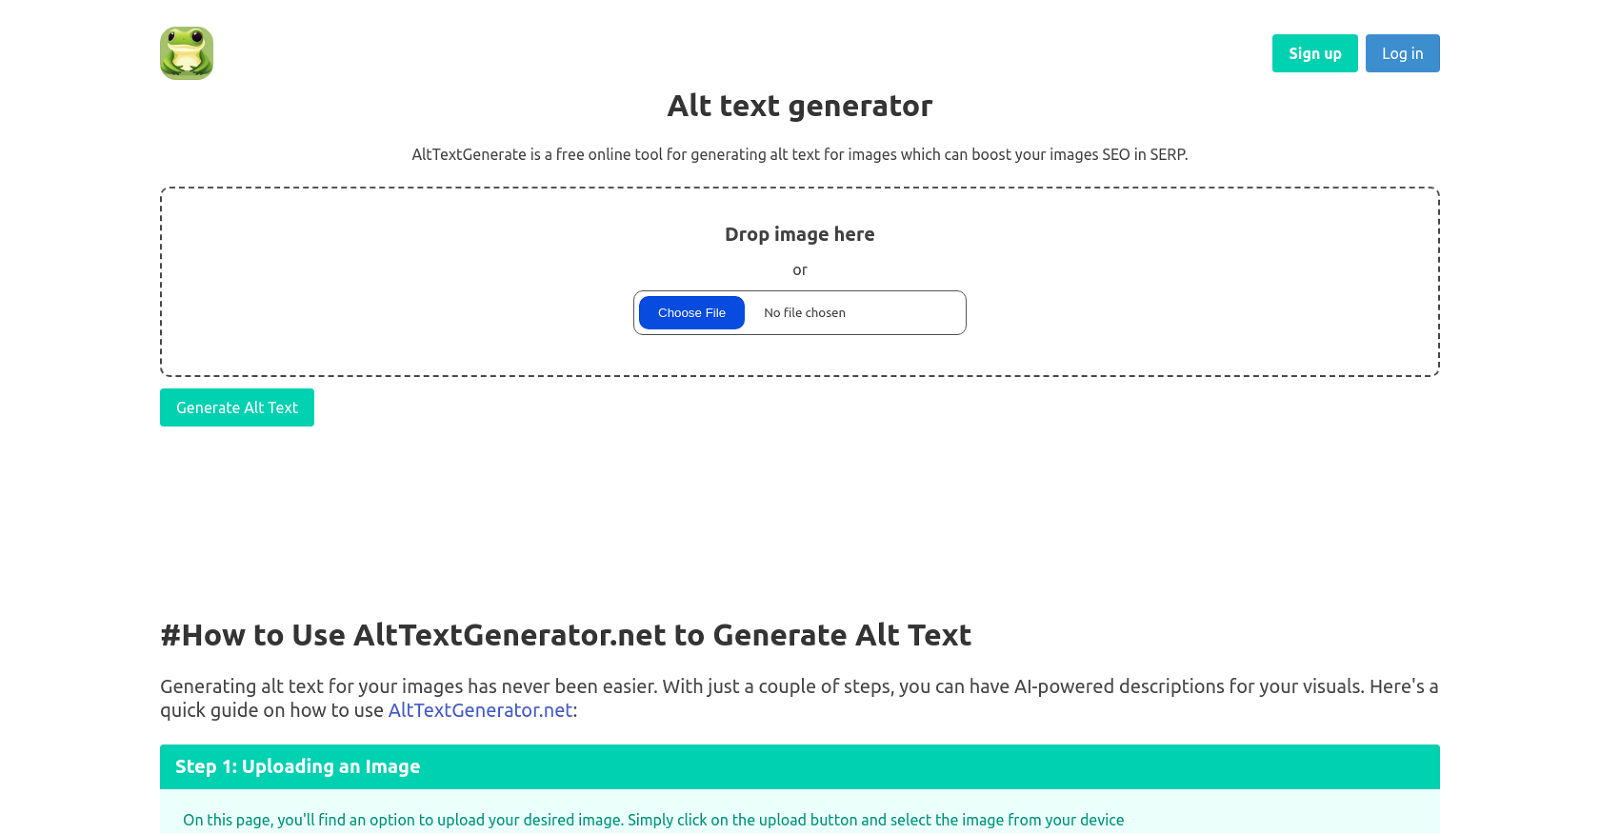 Alt Text Generator